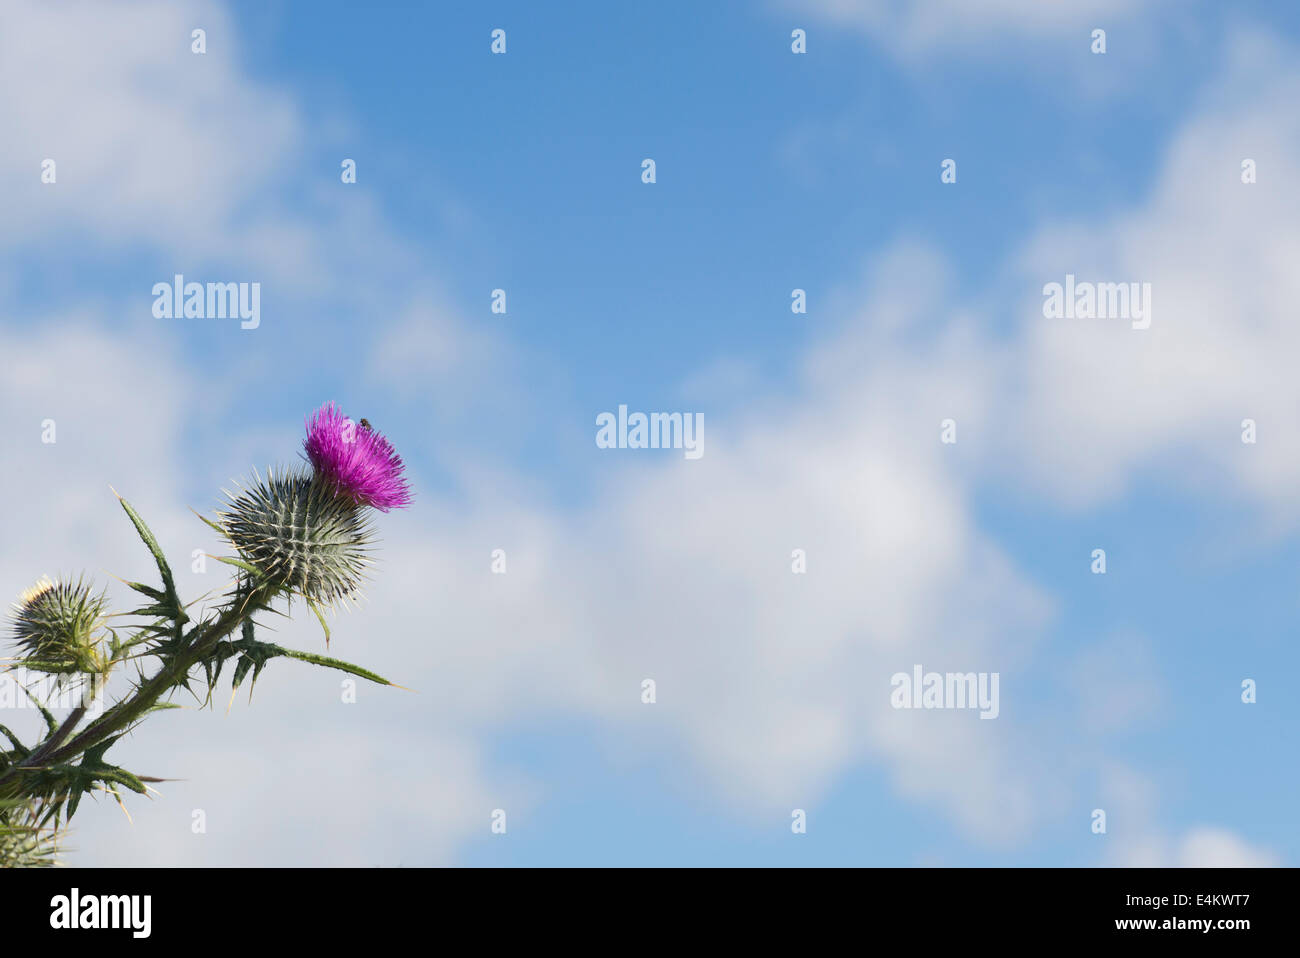 Onopordum acanthium. Cotton thistle or Scotch thistle against blue cloudy sky Stock Photo